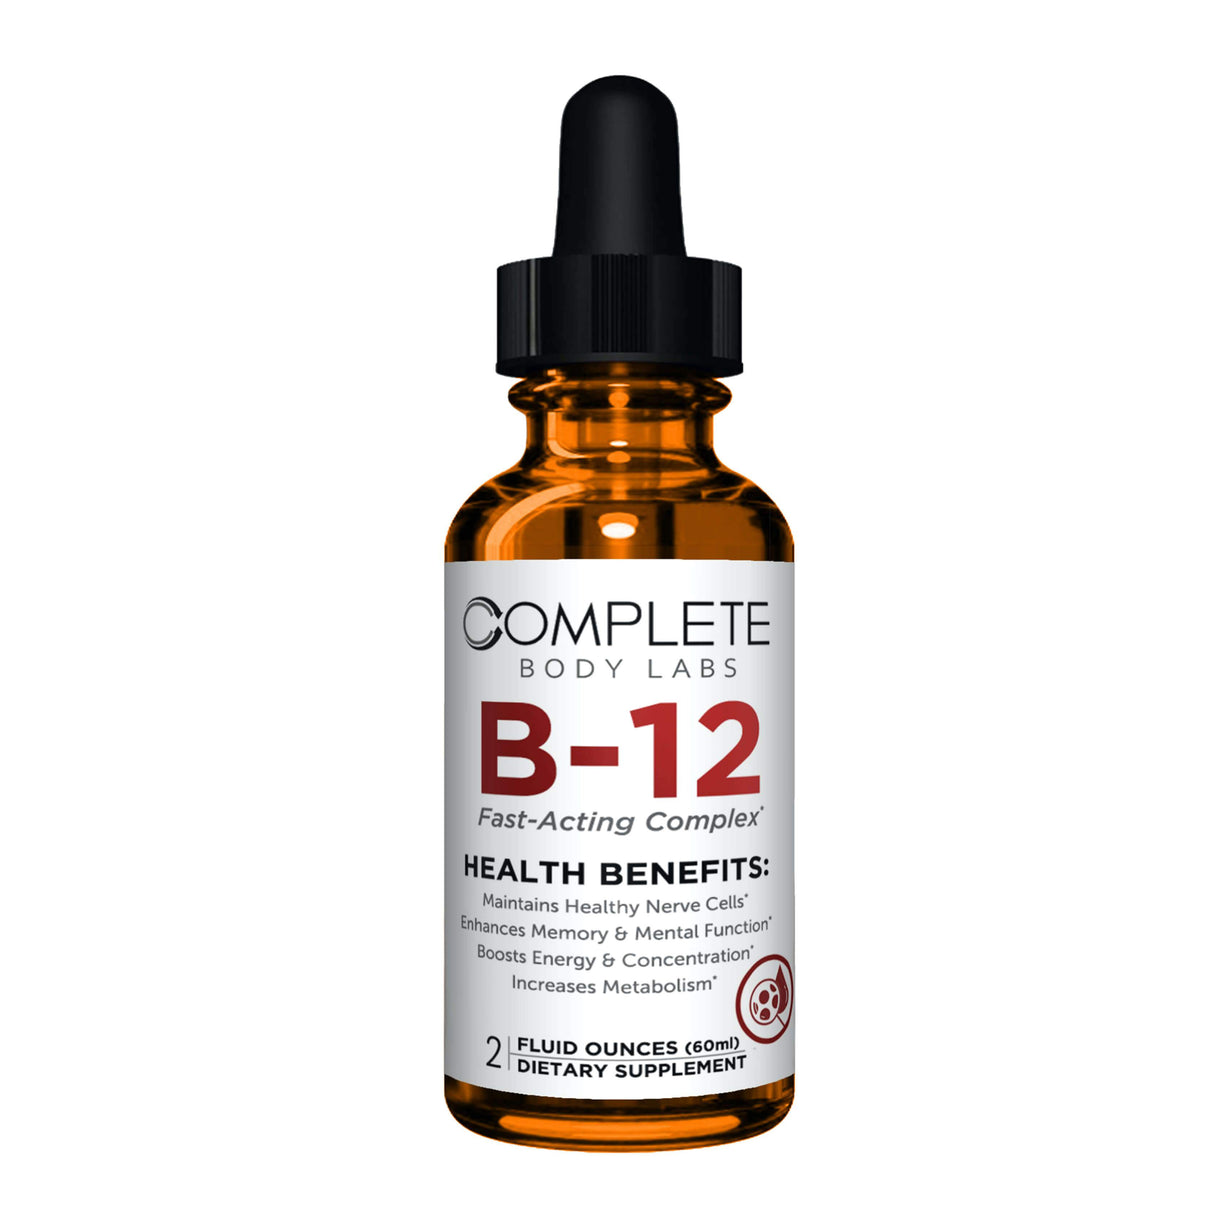 B-12 (Fast-Acting Complex) Complete Body Labs | Probiotics, Nootropics, Brain Supplements, Protein Bars, Workout Supplements, Health Supplements, Omega-3 & Essential Vitamins For Men & Women